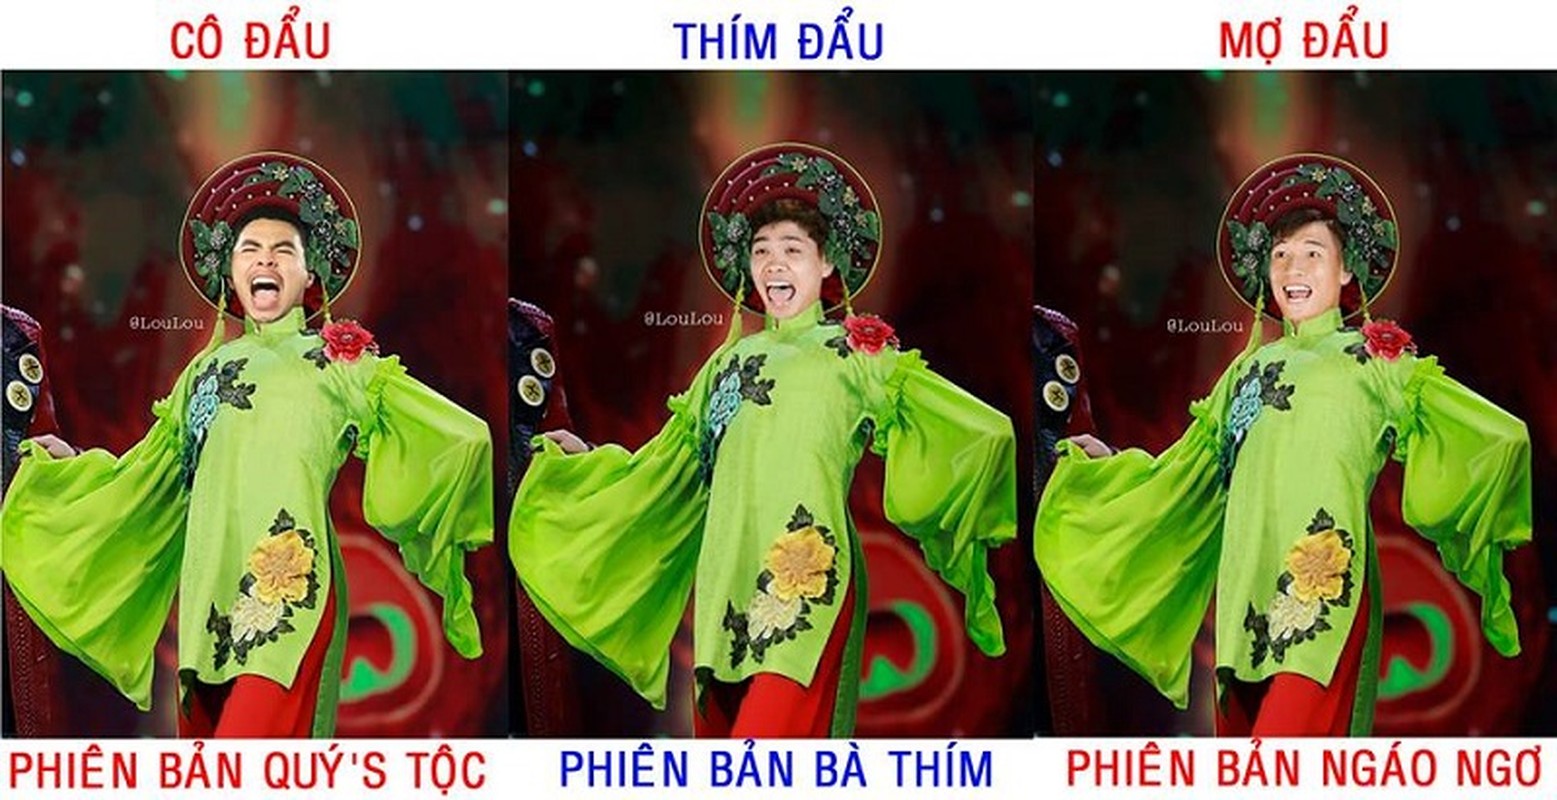 Cuoi te ghe voi anh che cau thu doi tuyen Viet Nam dong Tao quan-Hinh-9